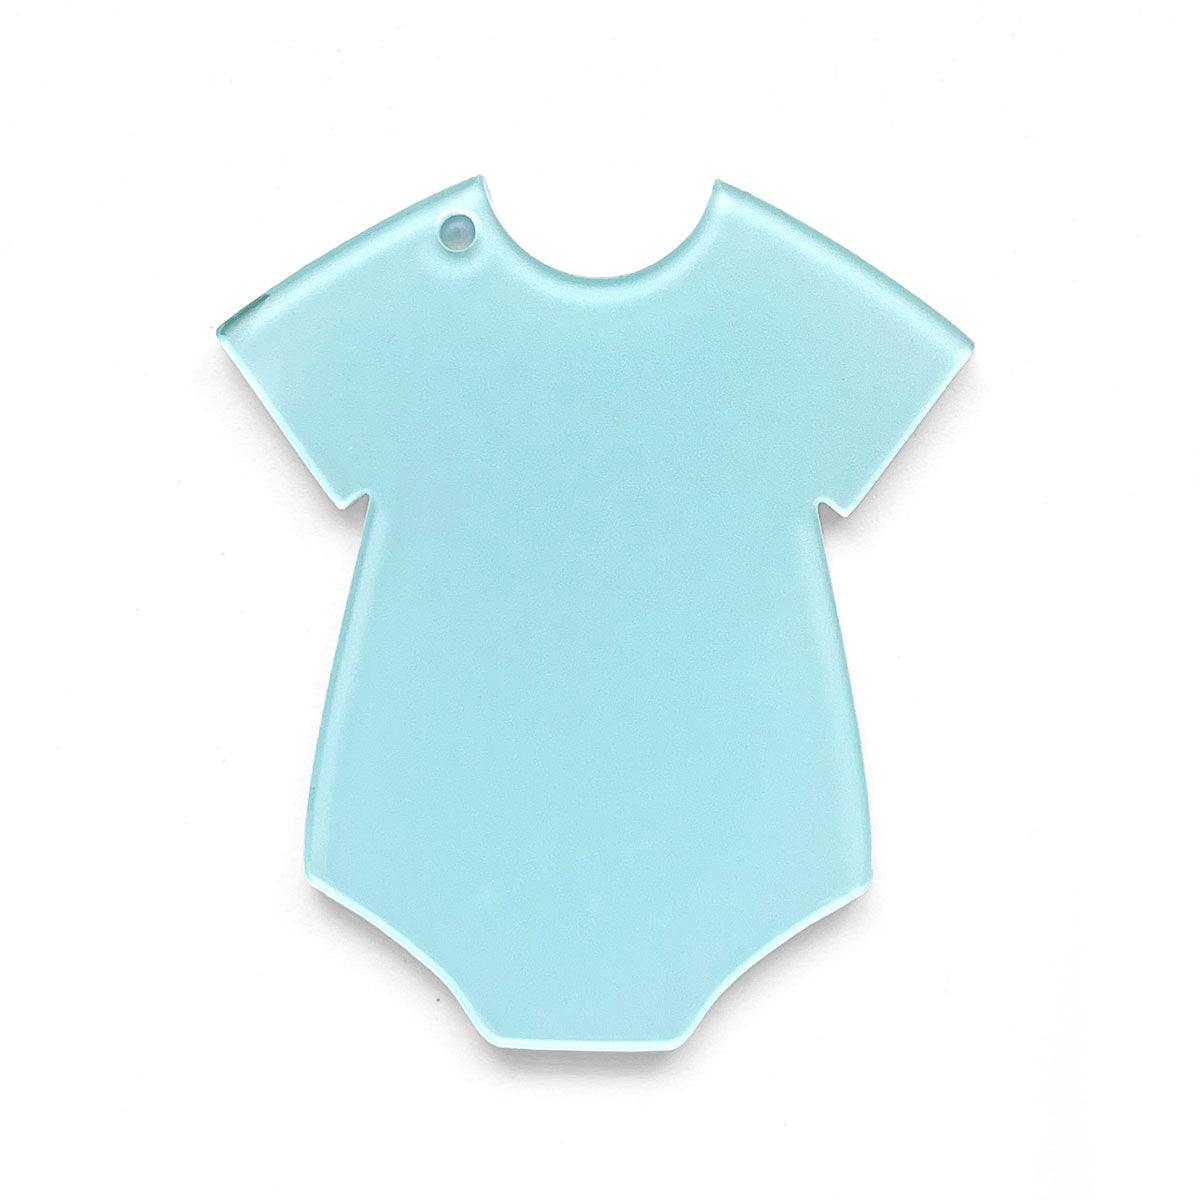 baby onesie template